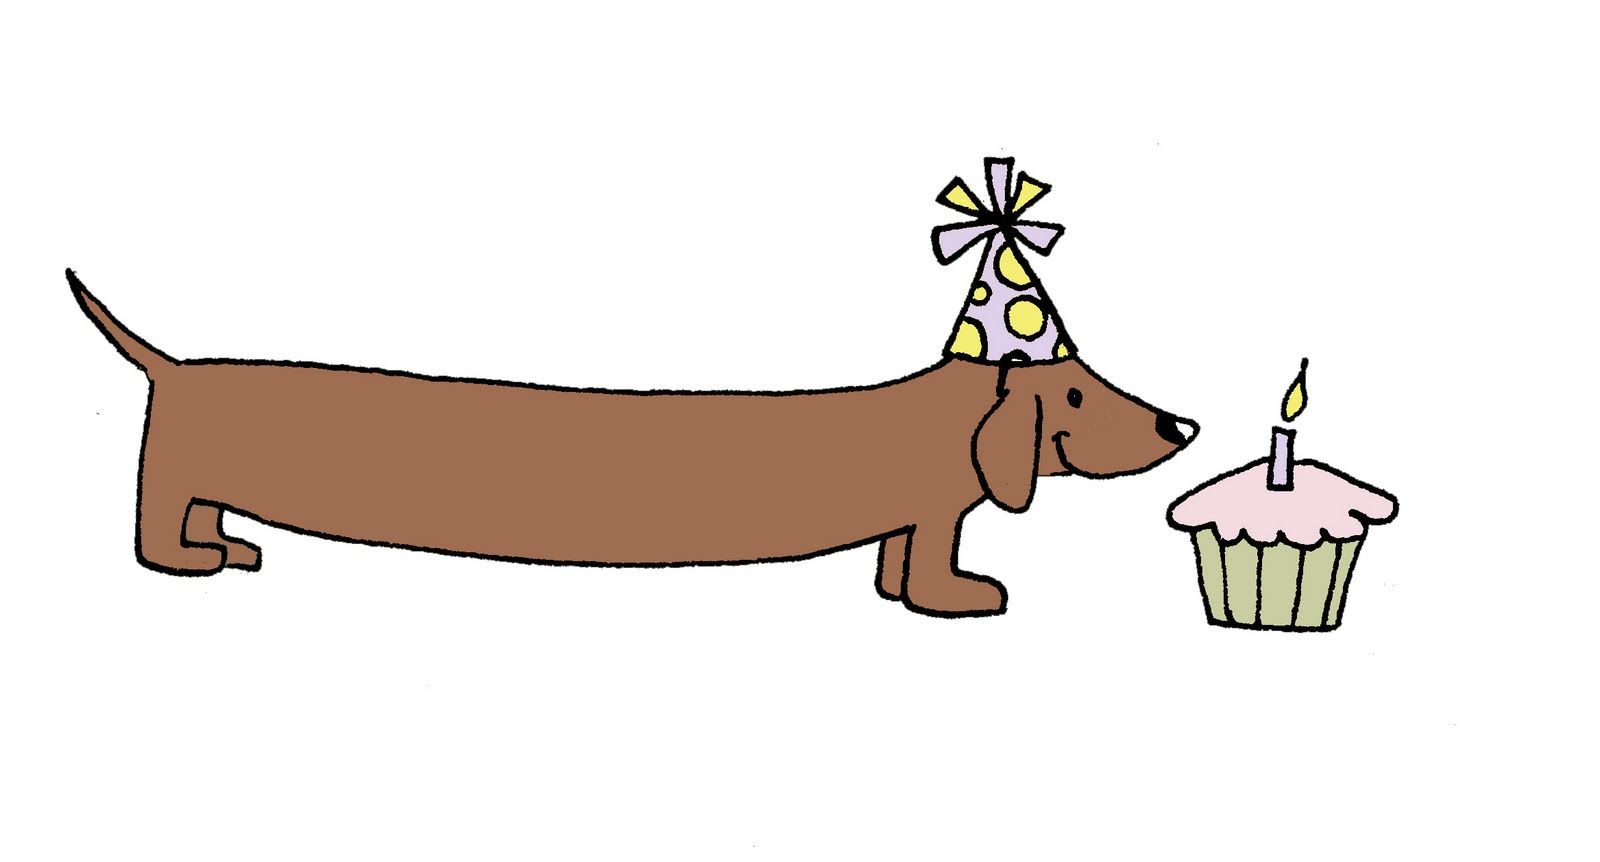 dachshund clipart happy birthday dachshund